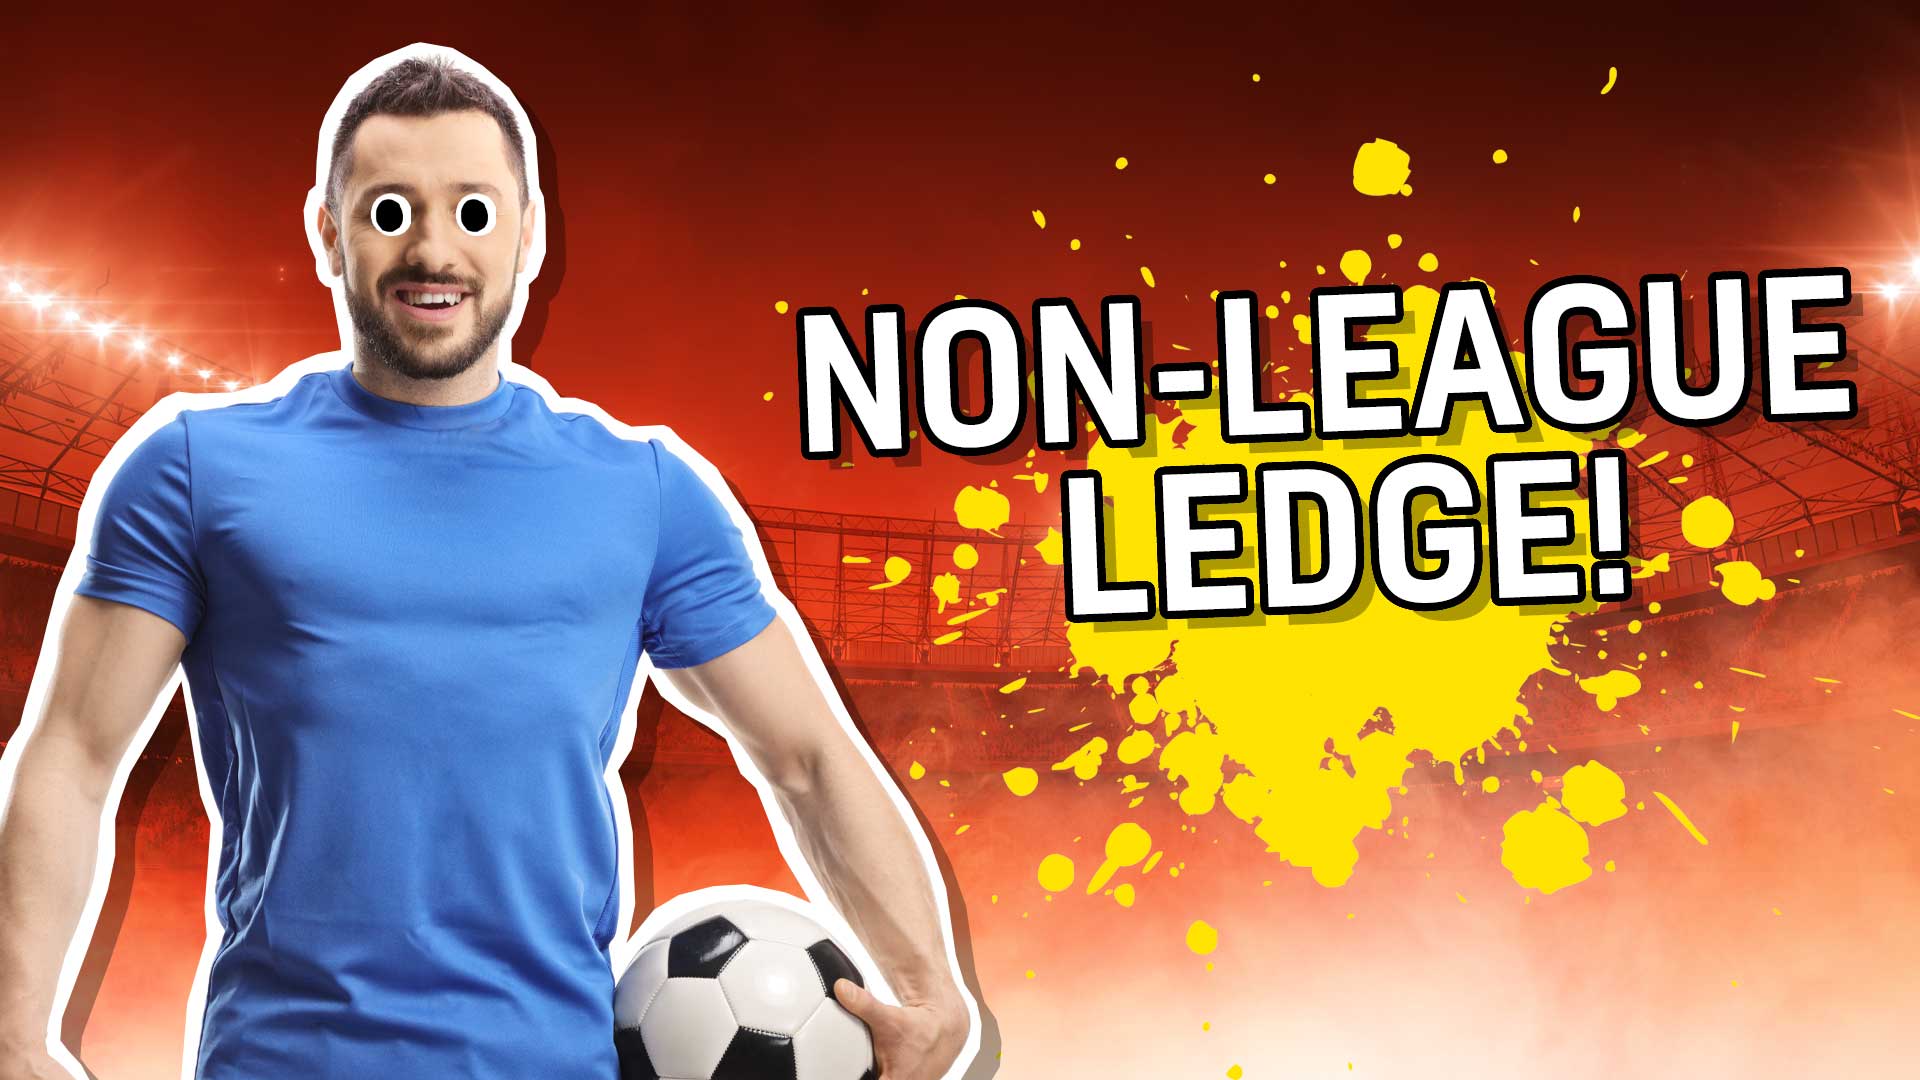 Non-league ledge